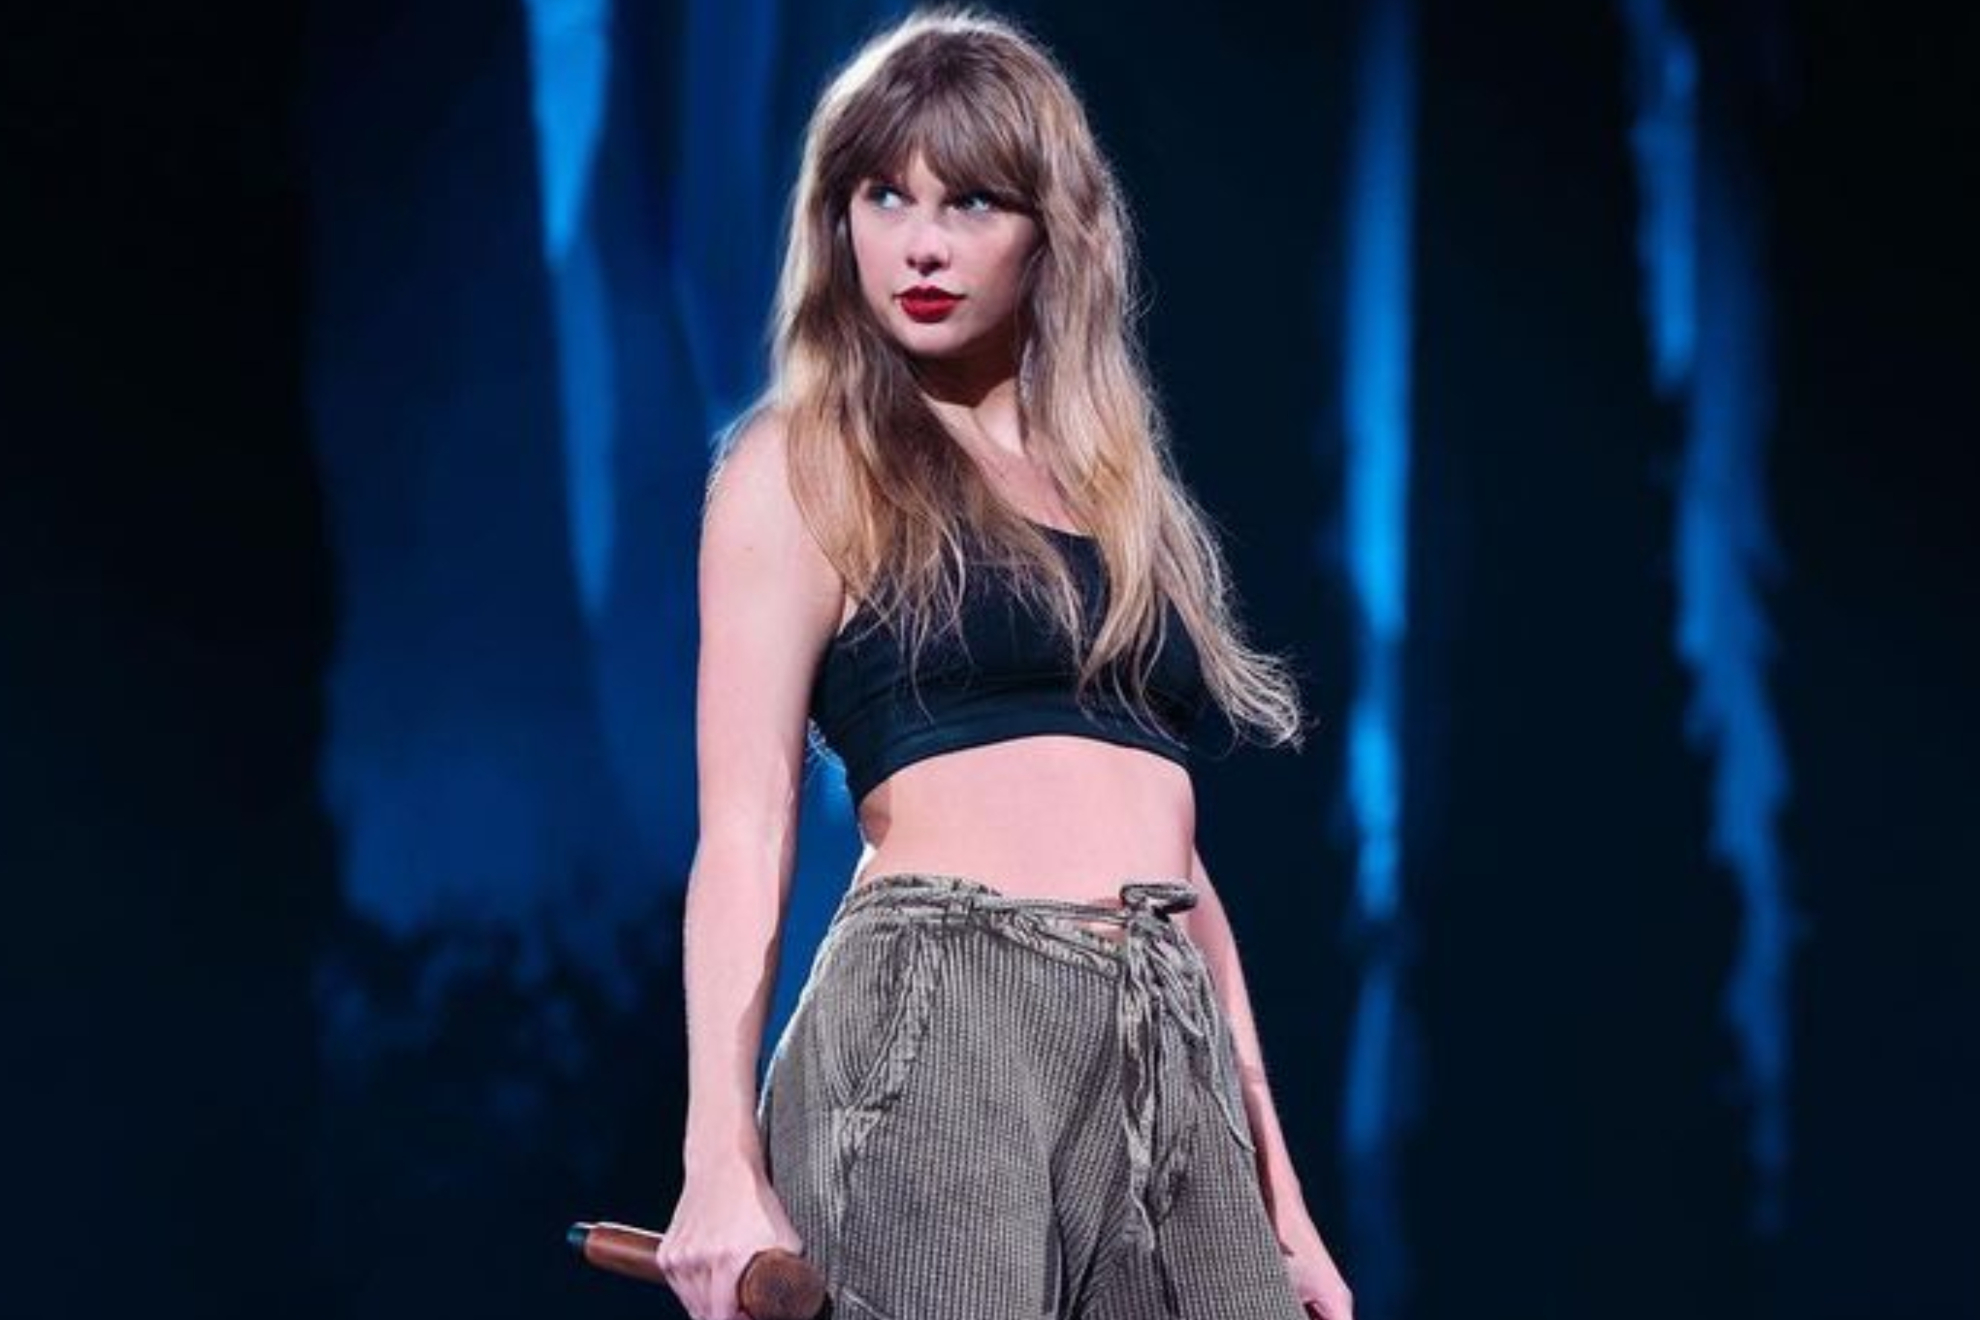 Swift will kick off her Eras Tour in Glendale, Arizona.